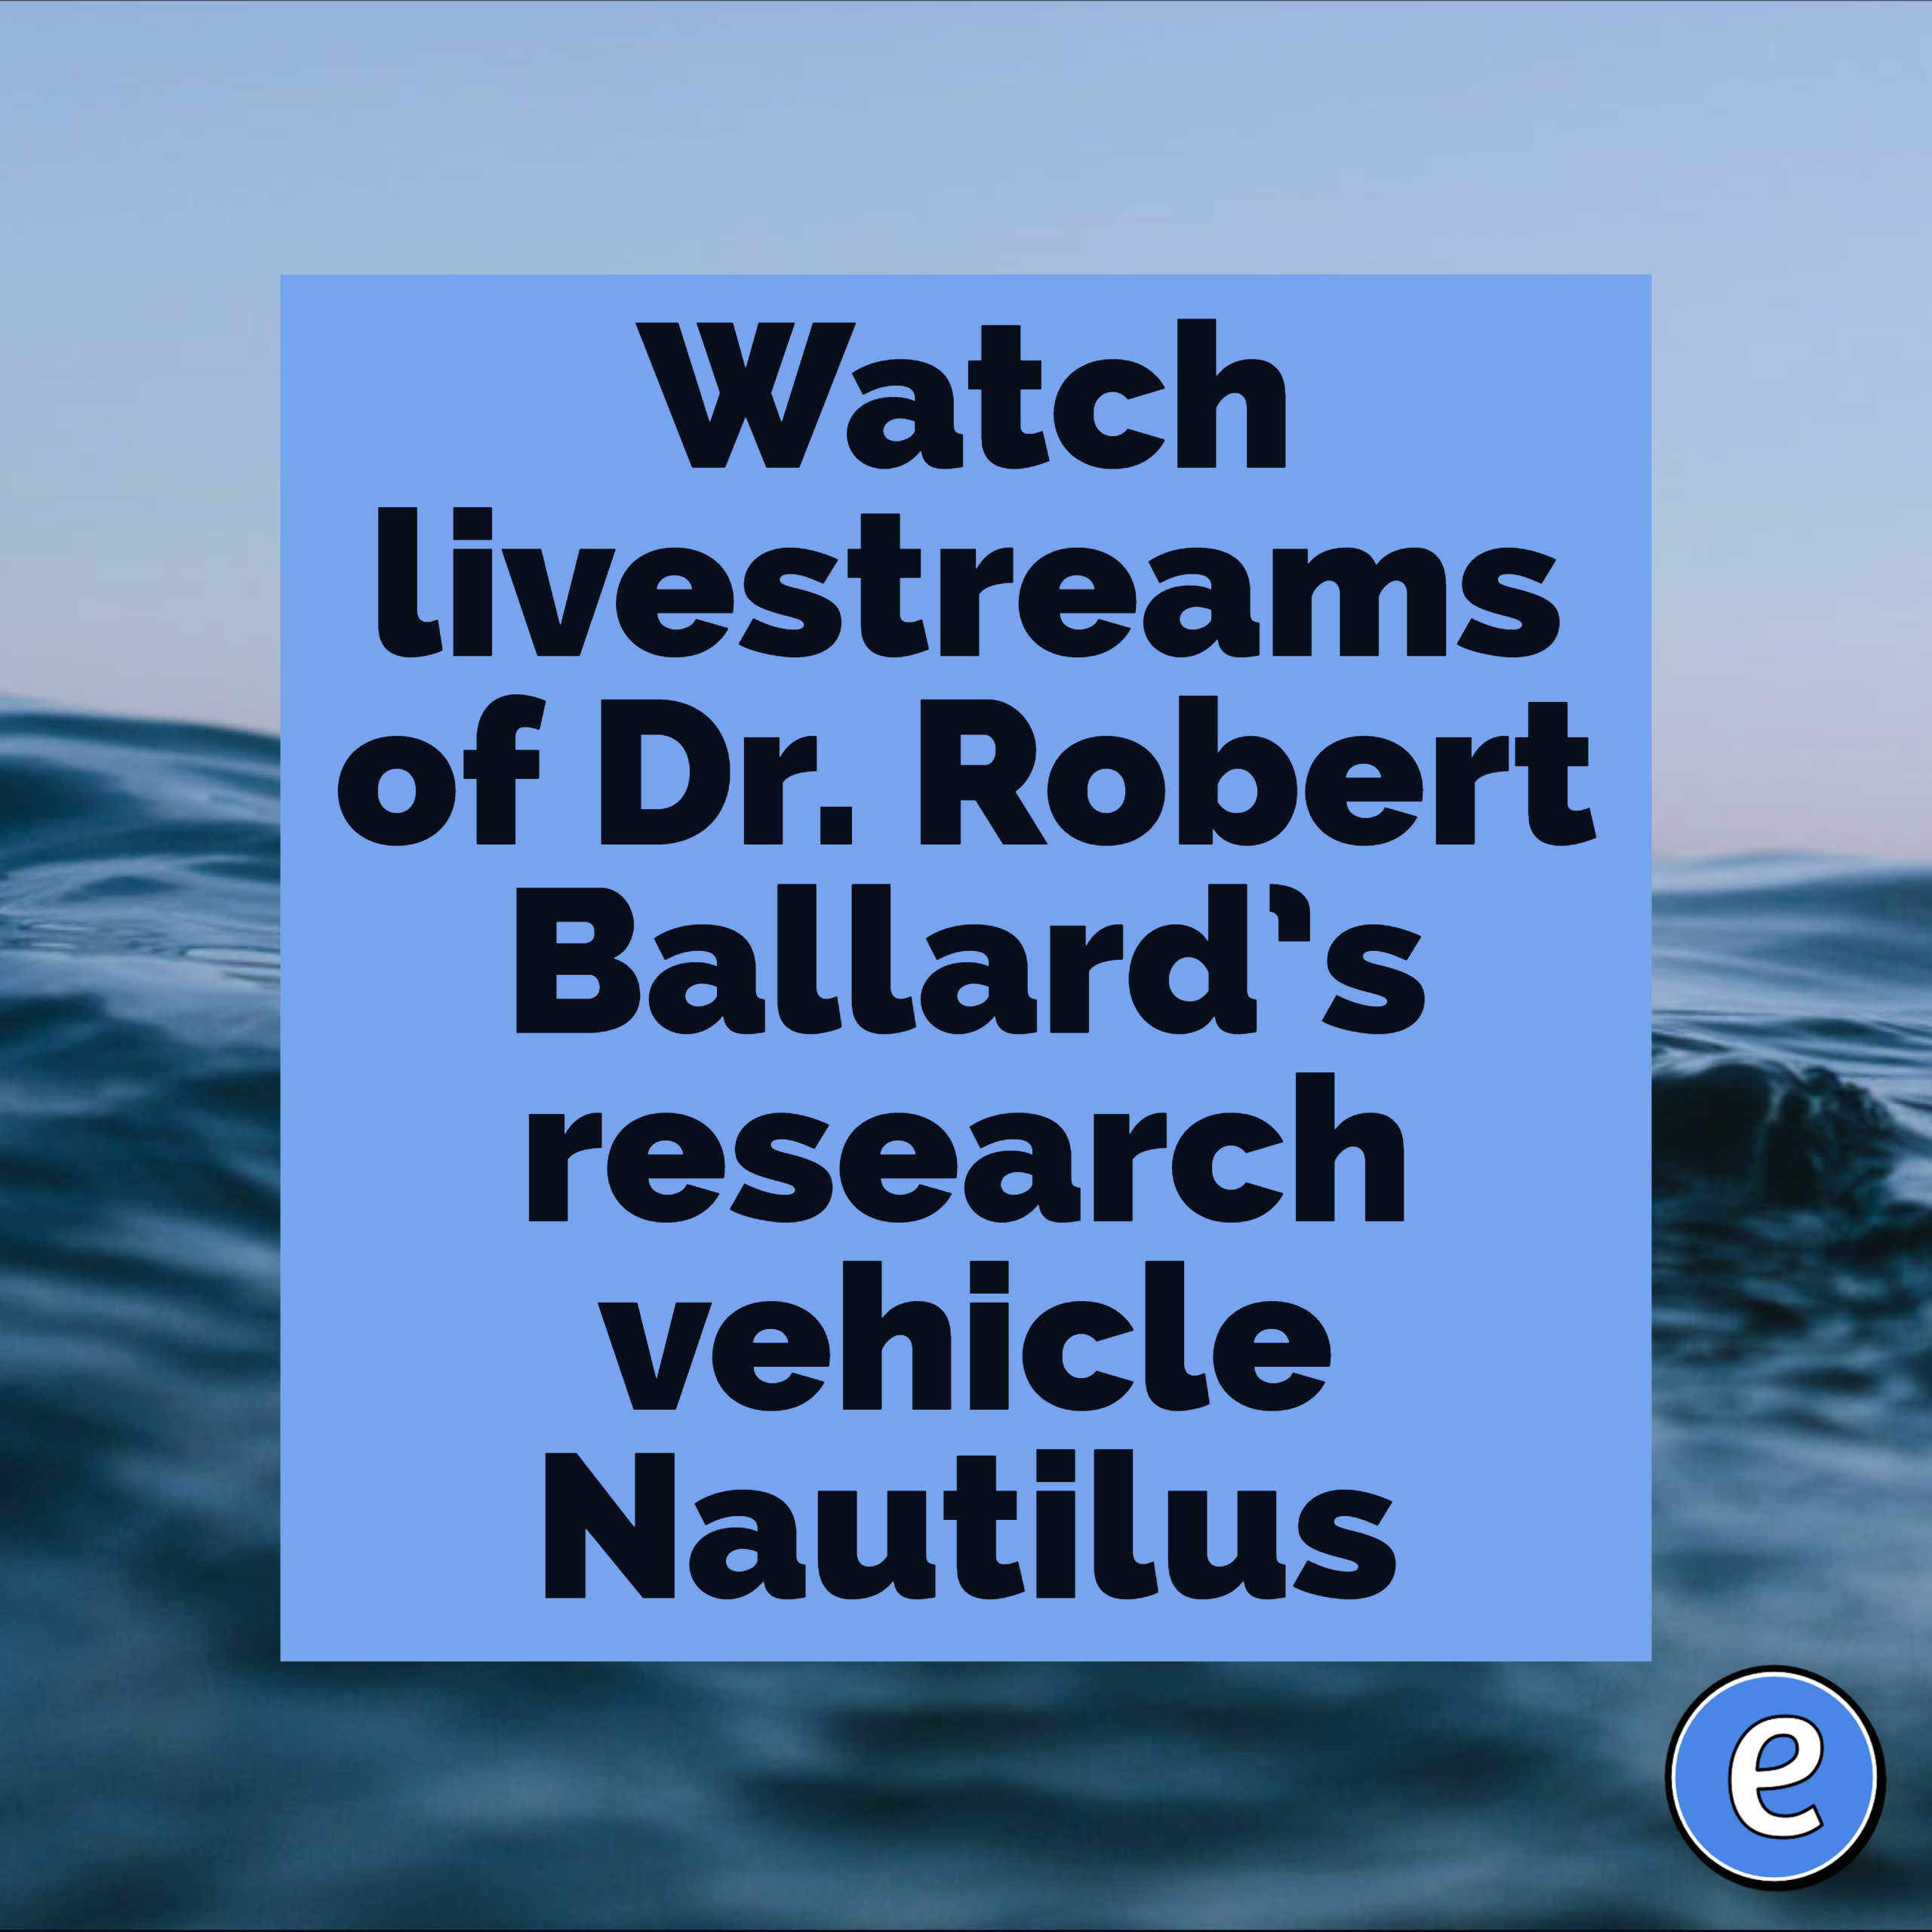 Watch livestreams of Dr. Robert Ballard’s research vehicle Nautilus